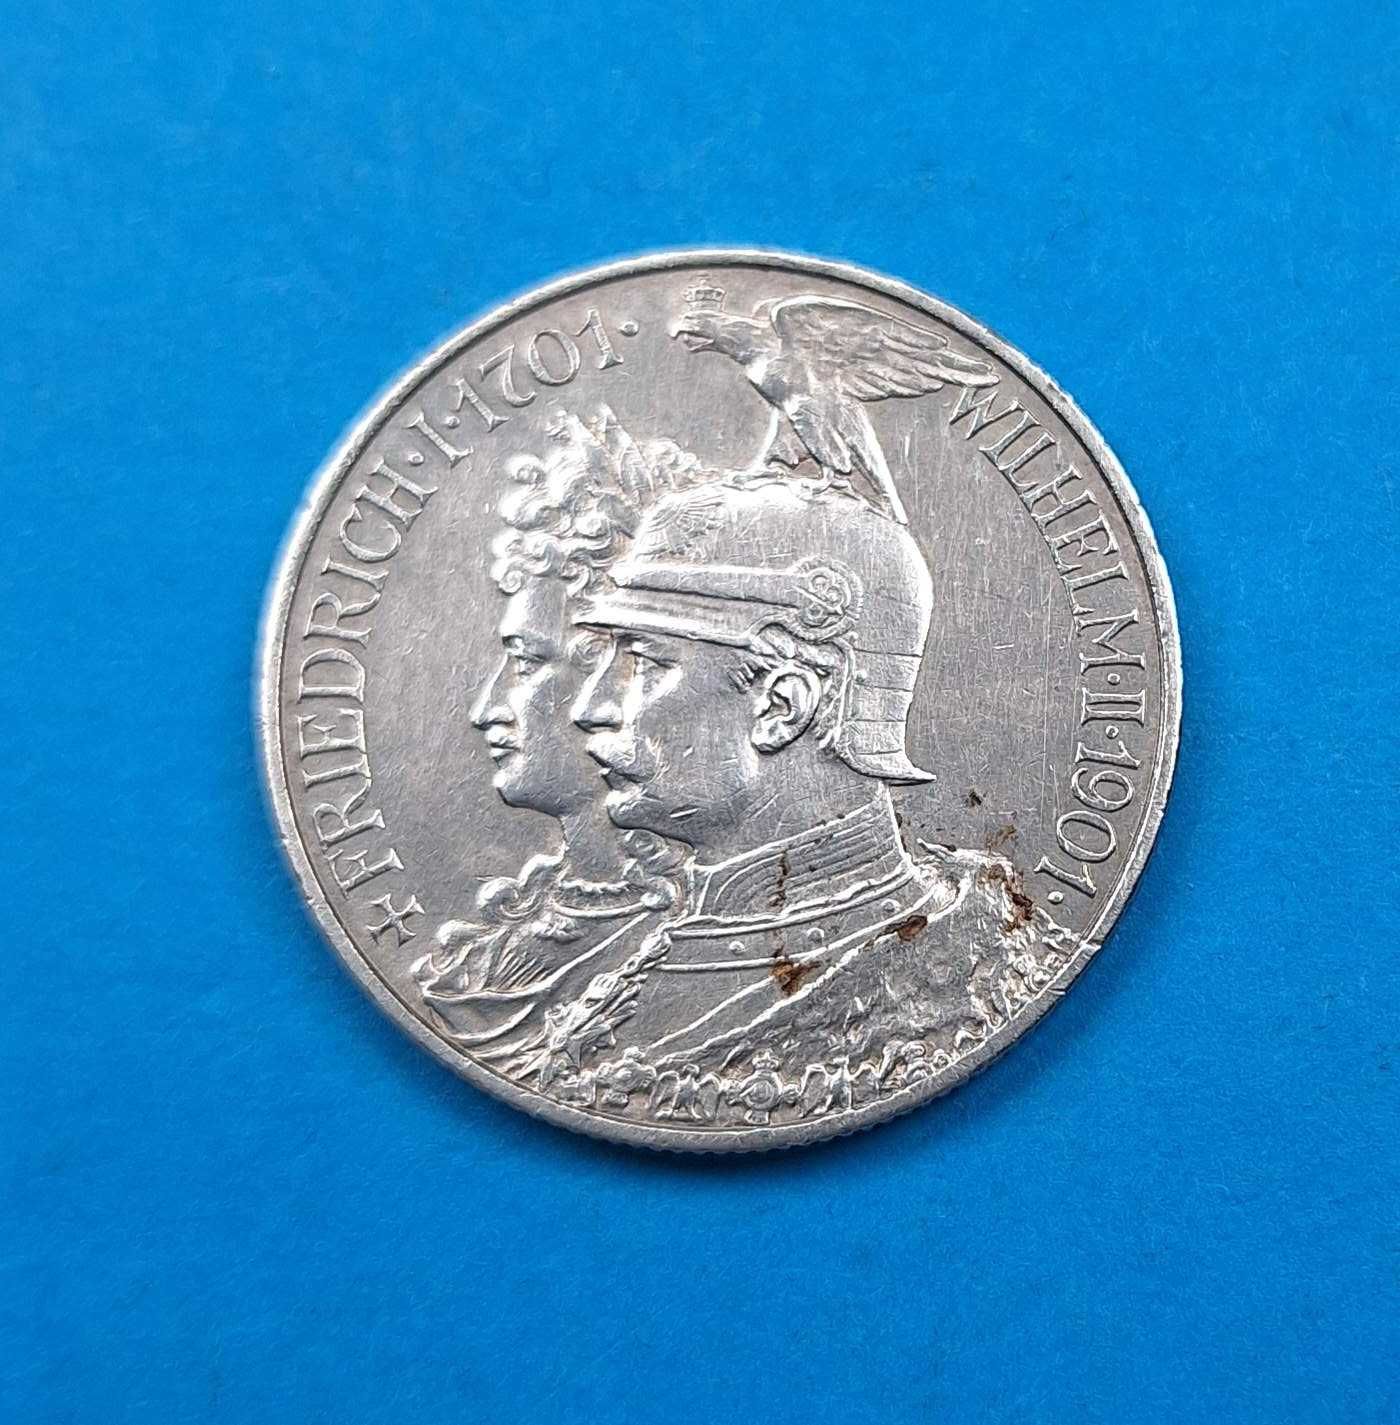 Niemcy, Prusy 2 marki 1901, 200 lat Prus, bdb stan, srebro 0,900